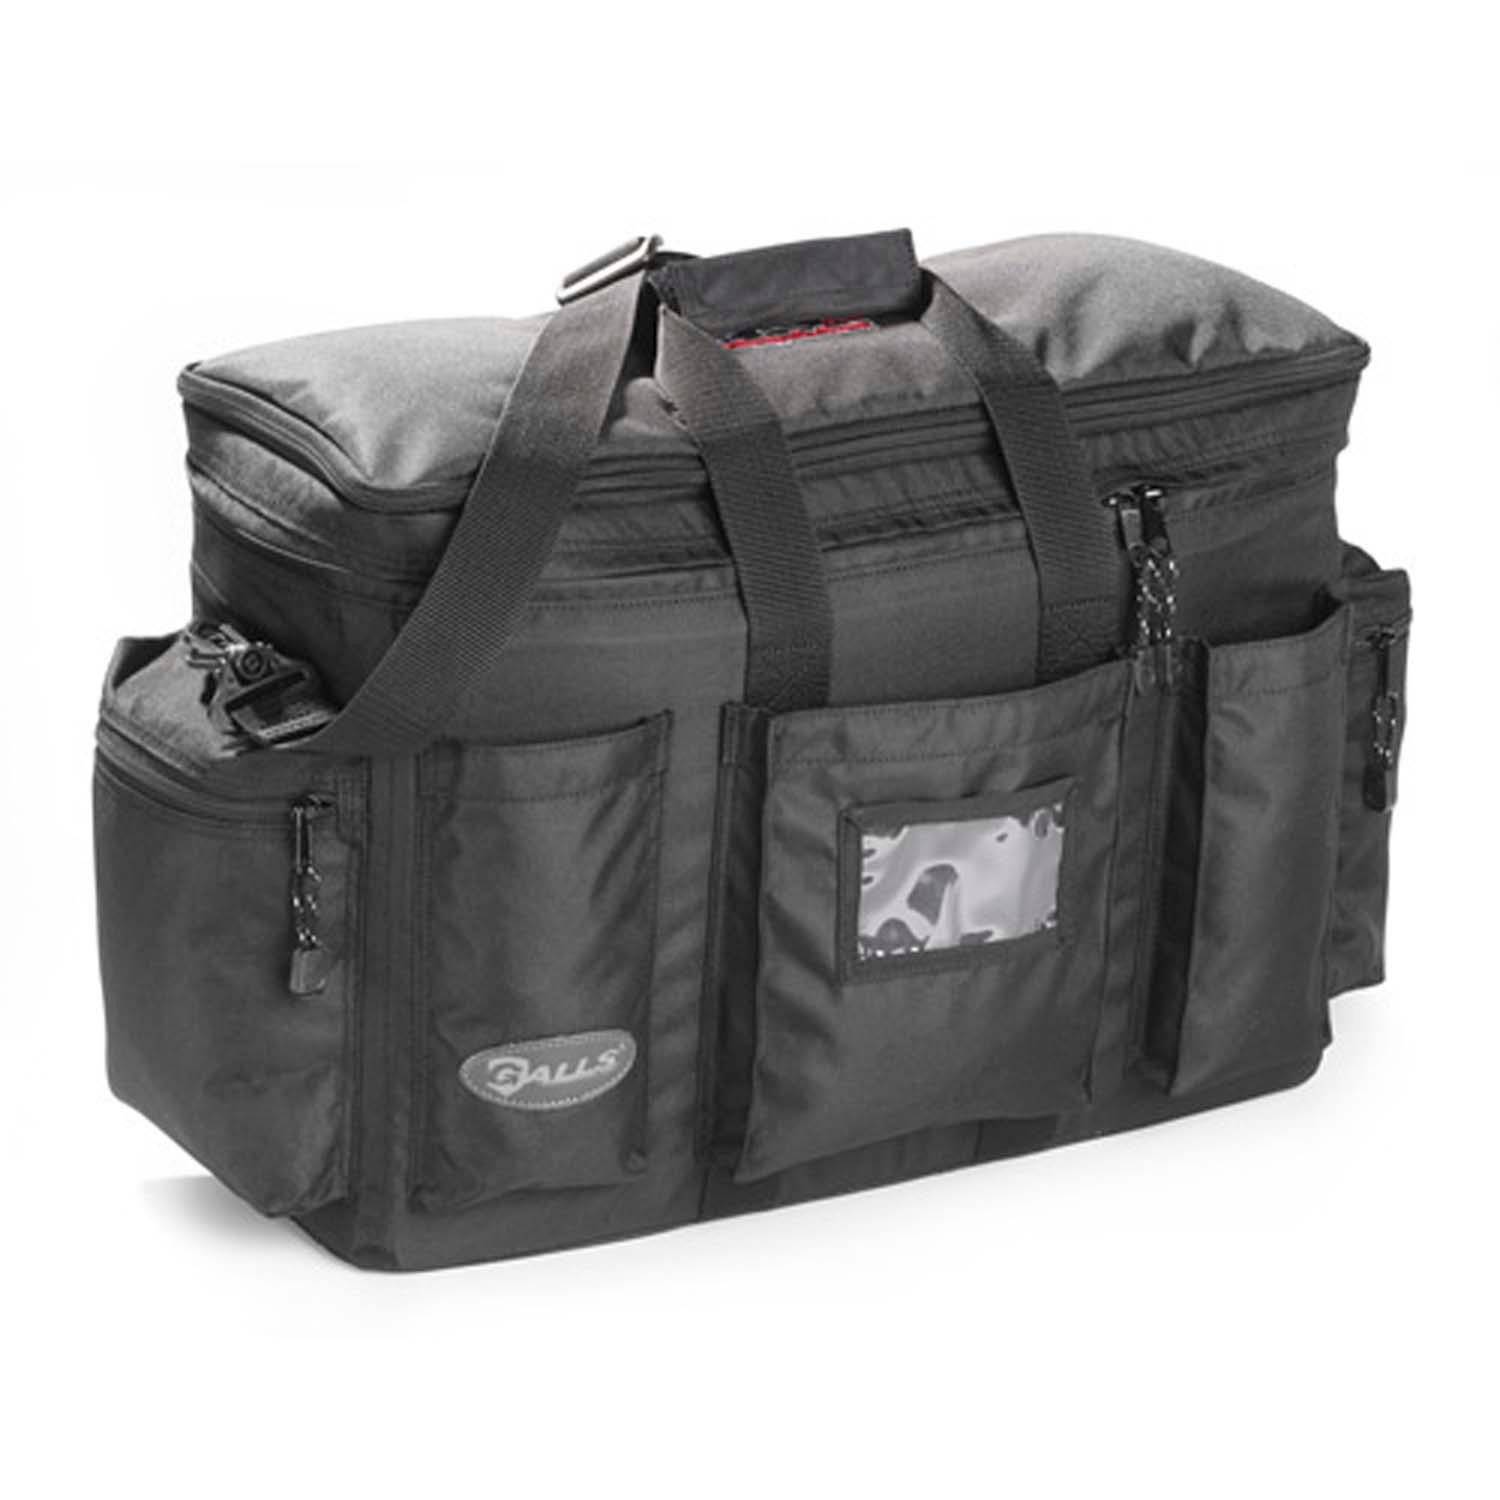 Galls Customizable StreetPro Gear Bag